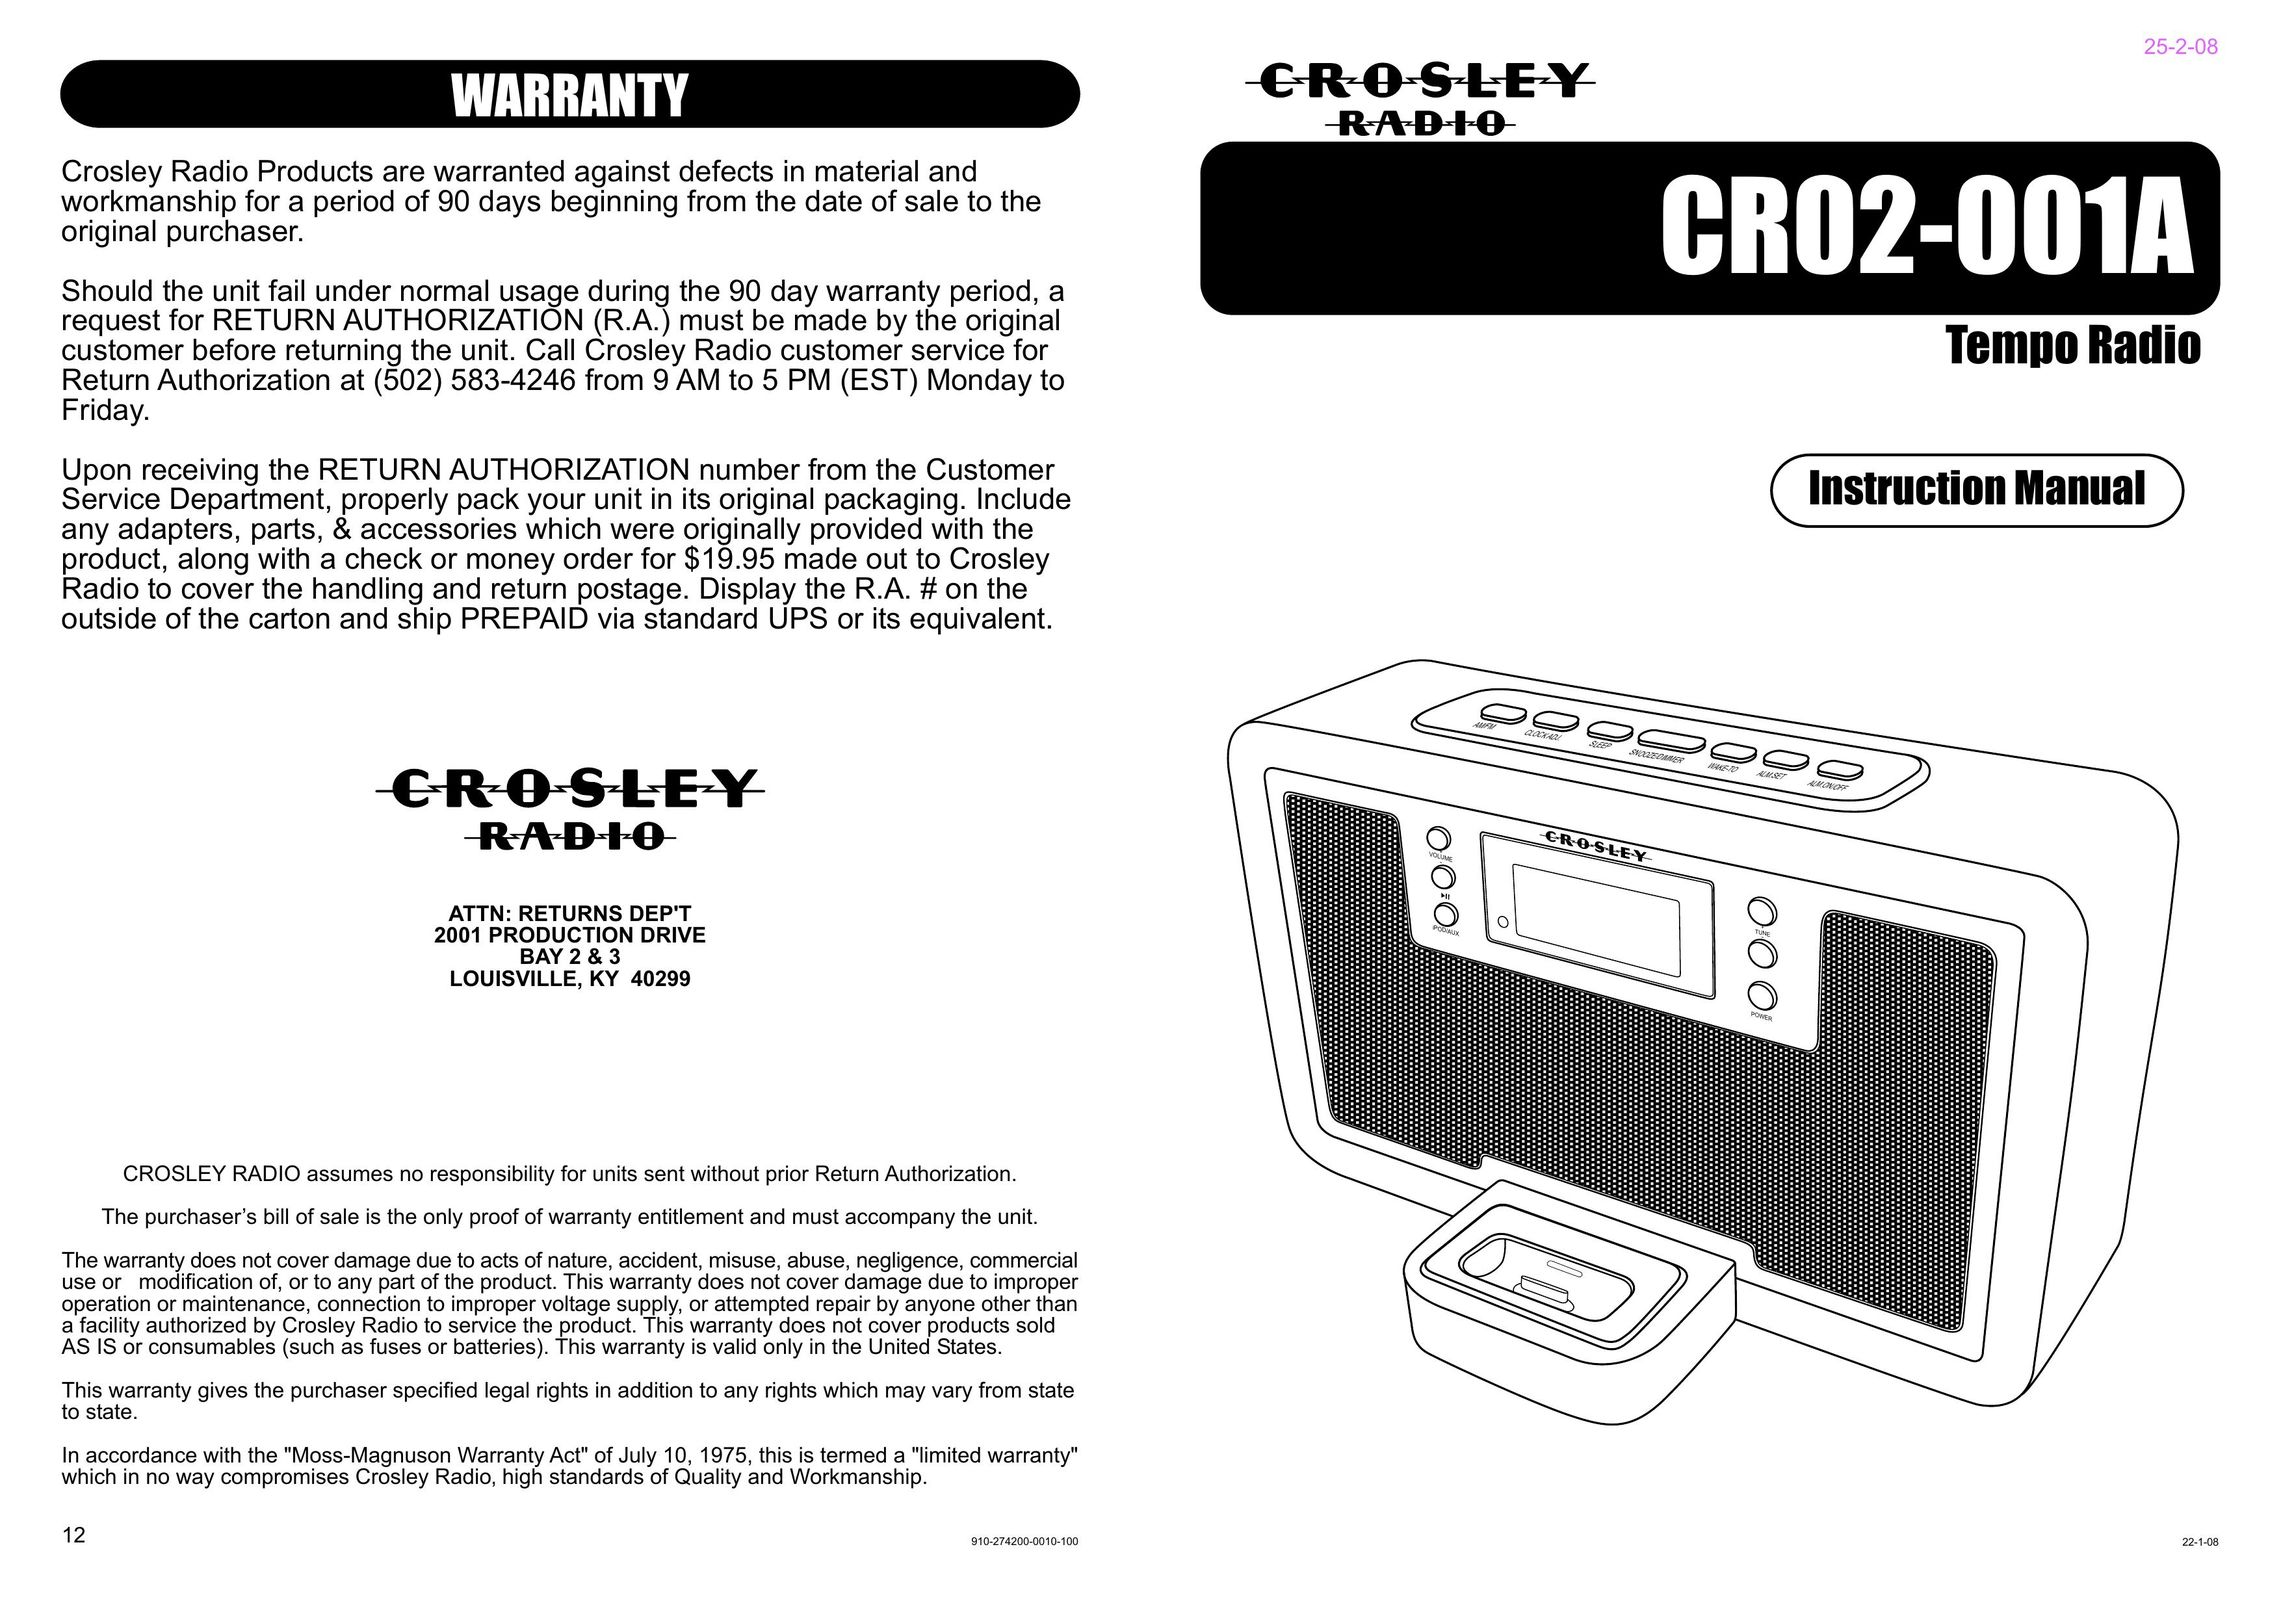 Crosley Radio CR02-001A Car Stereo System User Manual